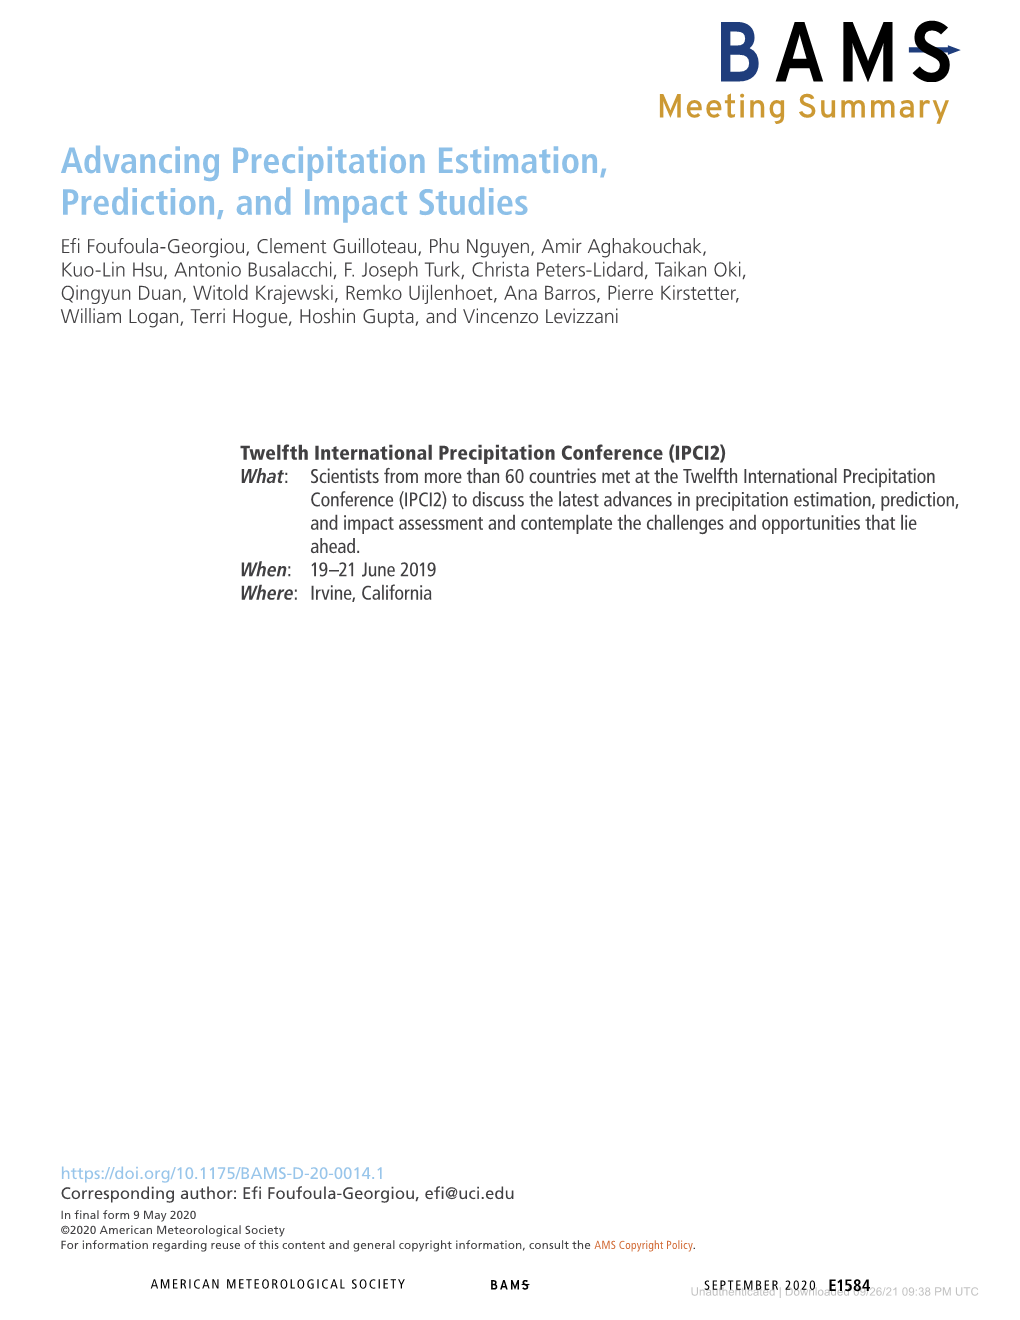 Advancing Precipitation Estimation, Prediction, and Impact Studies